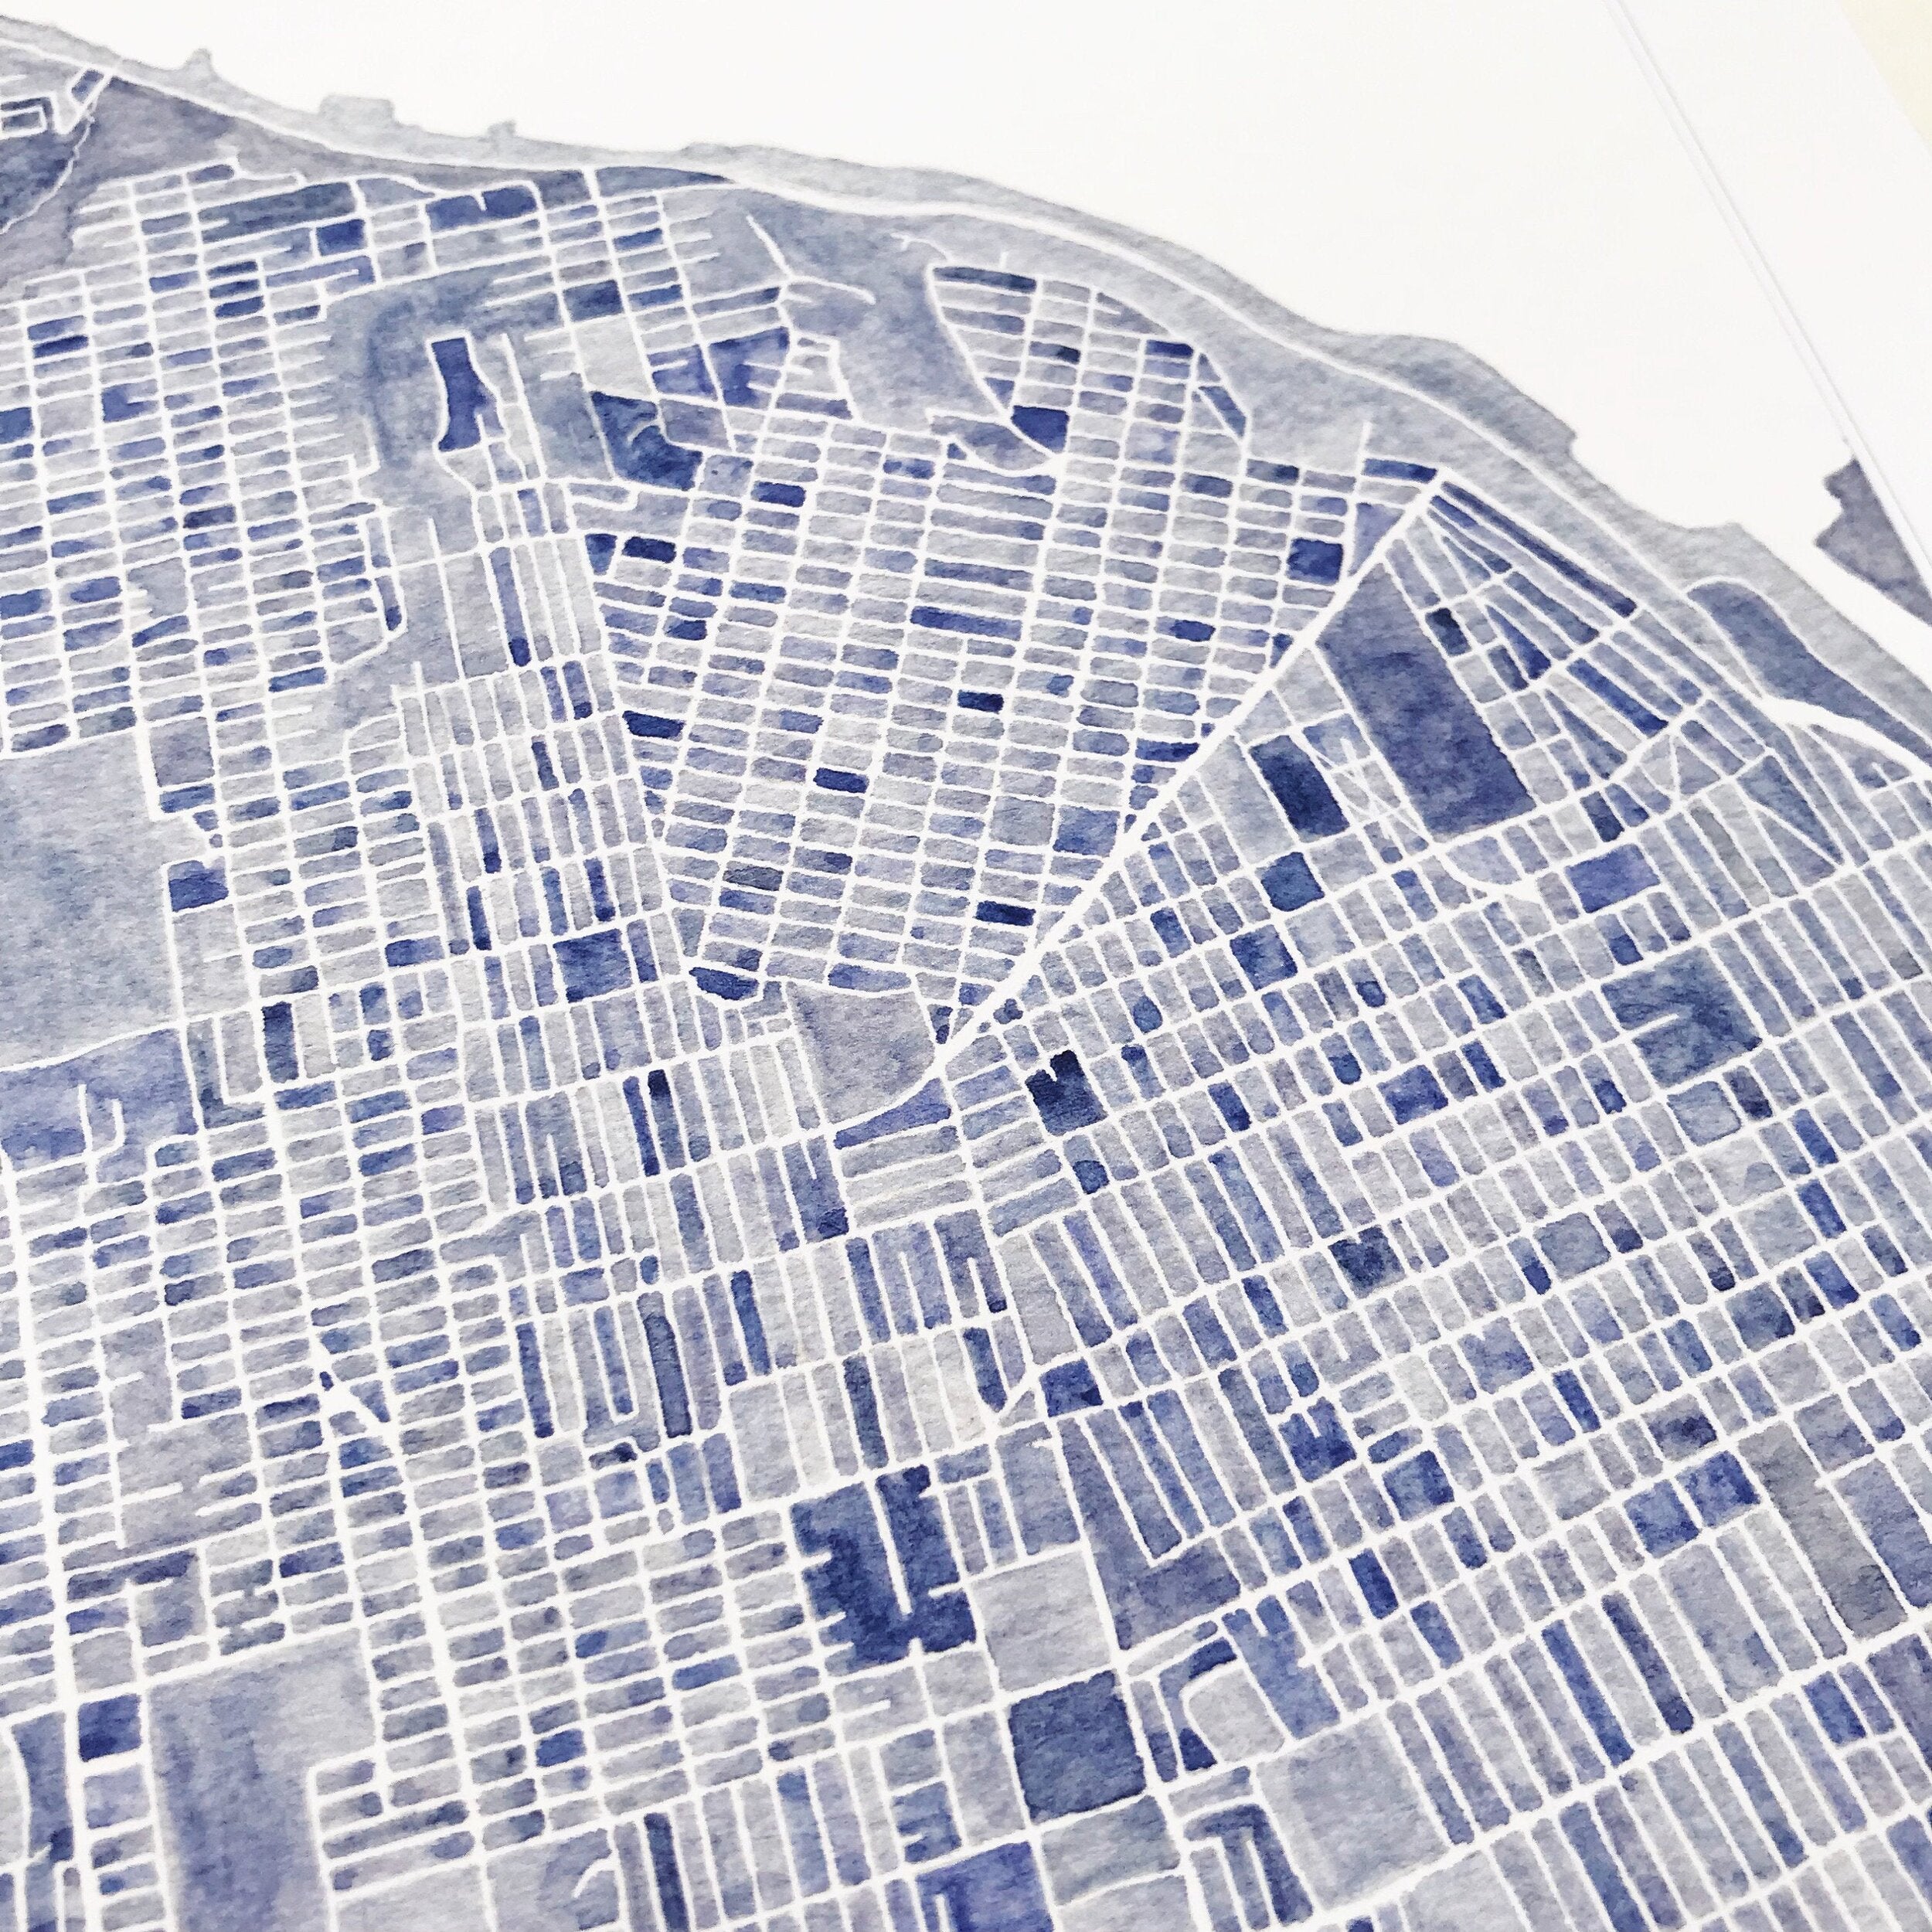 Middle TACOMA Watercolor City Blocks Map: PRINT